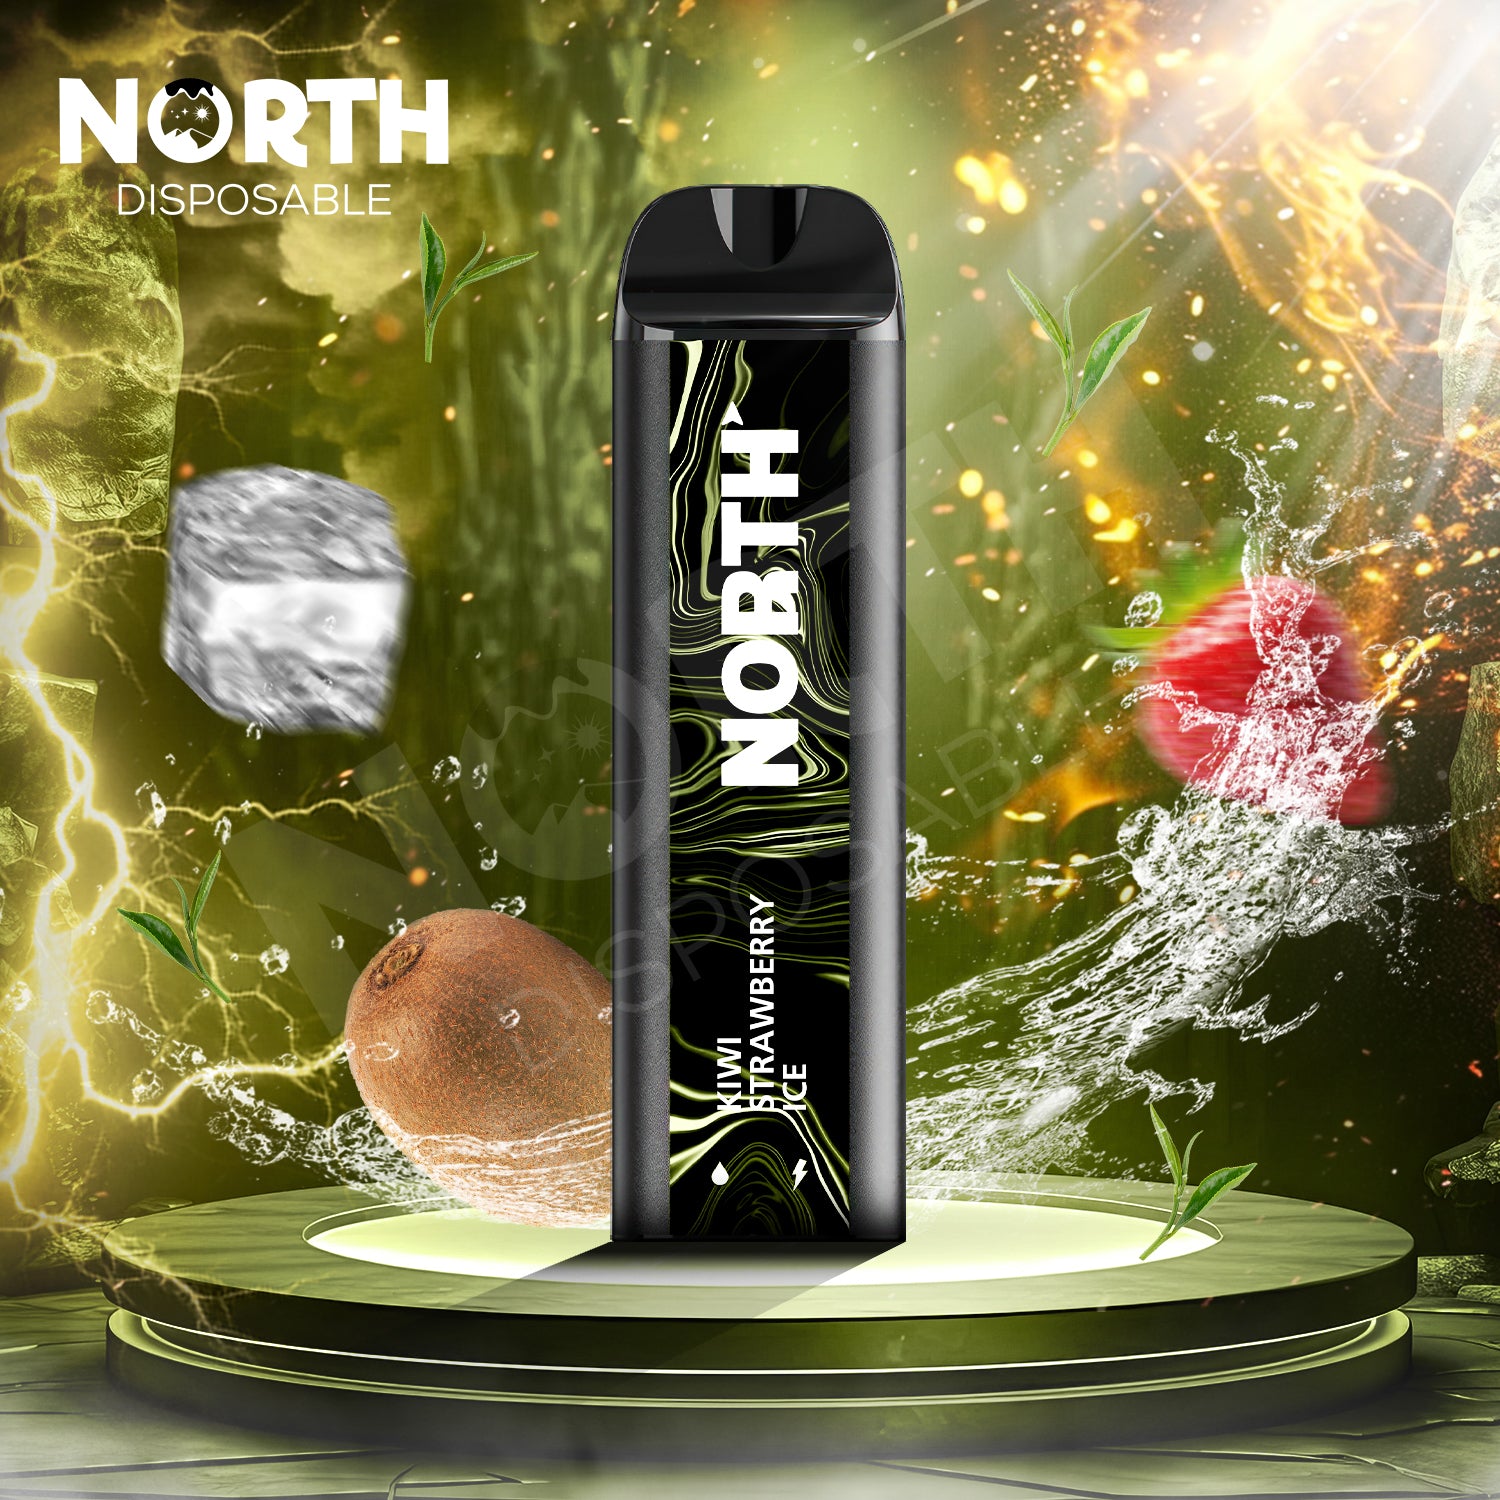 North 5000 Disposable 3% - Kiwi Strawberry Ice